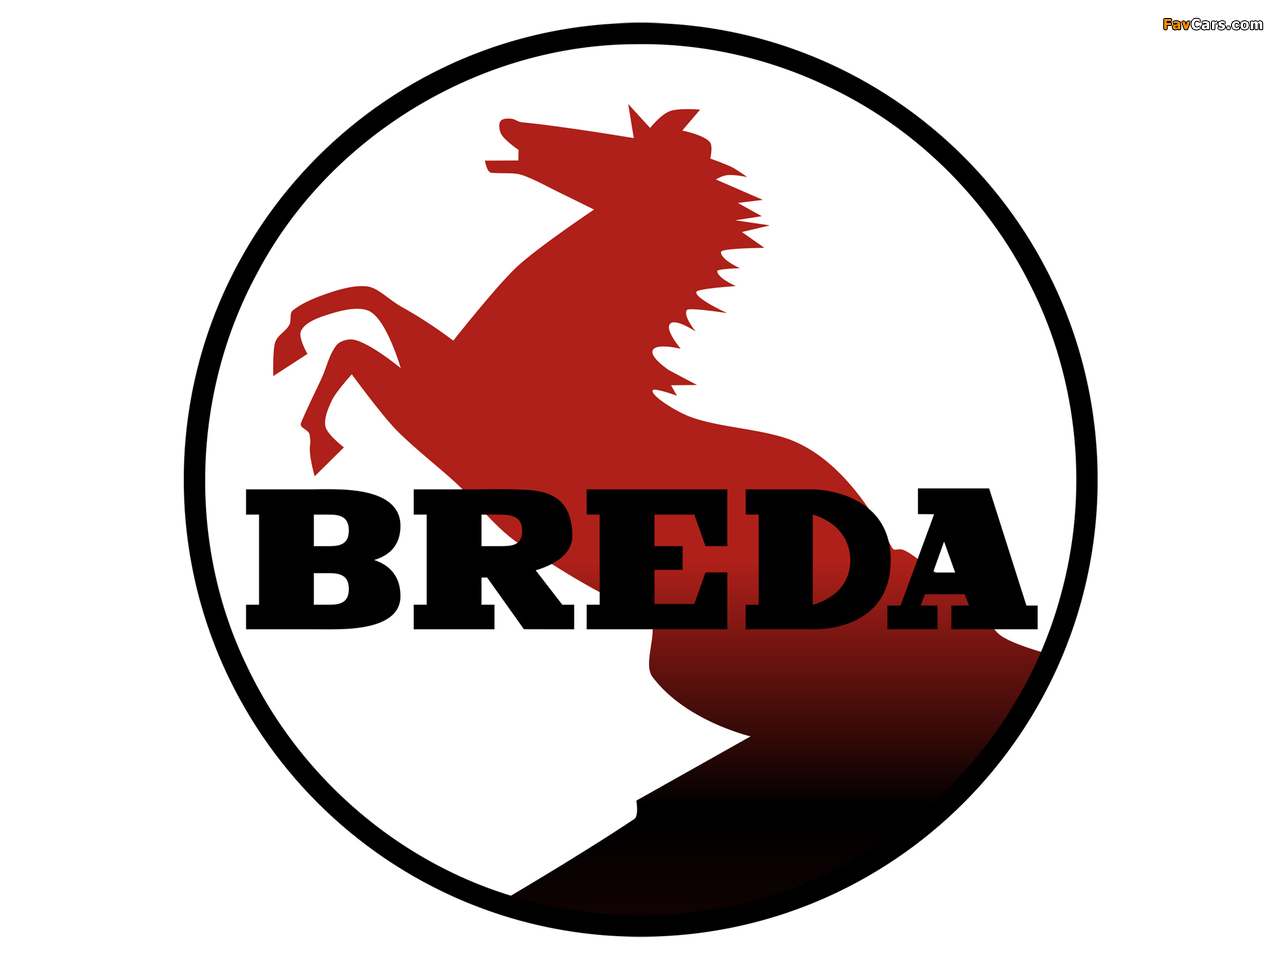 Breda images (1280 x 960)